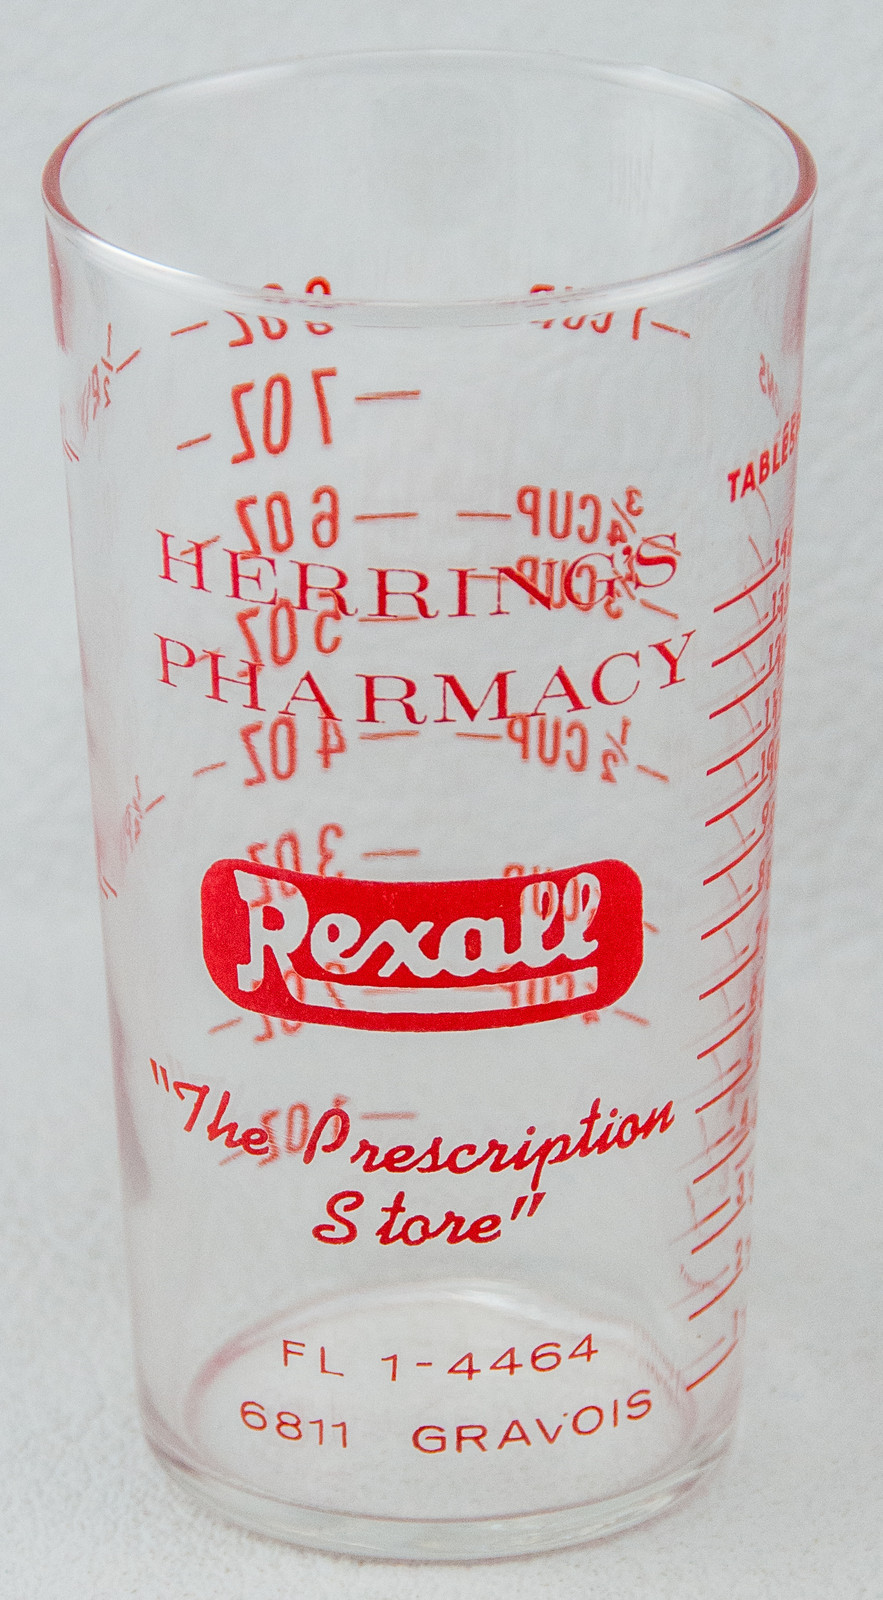 Herrings Pharmacy / Rexall